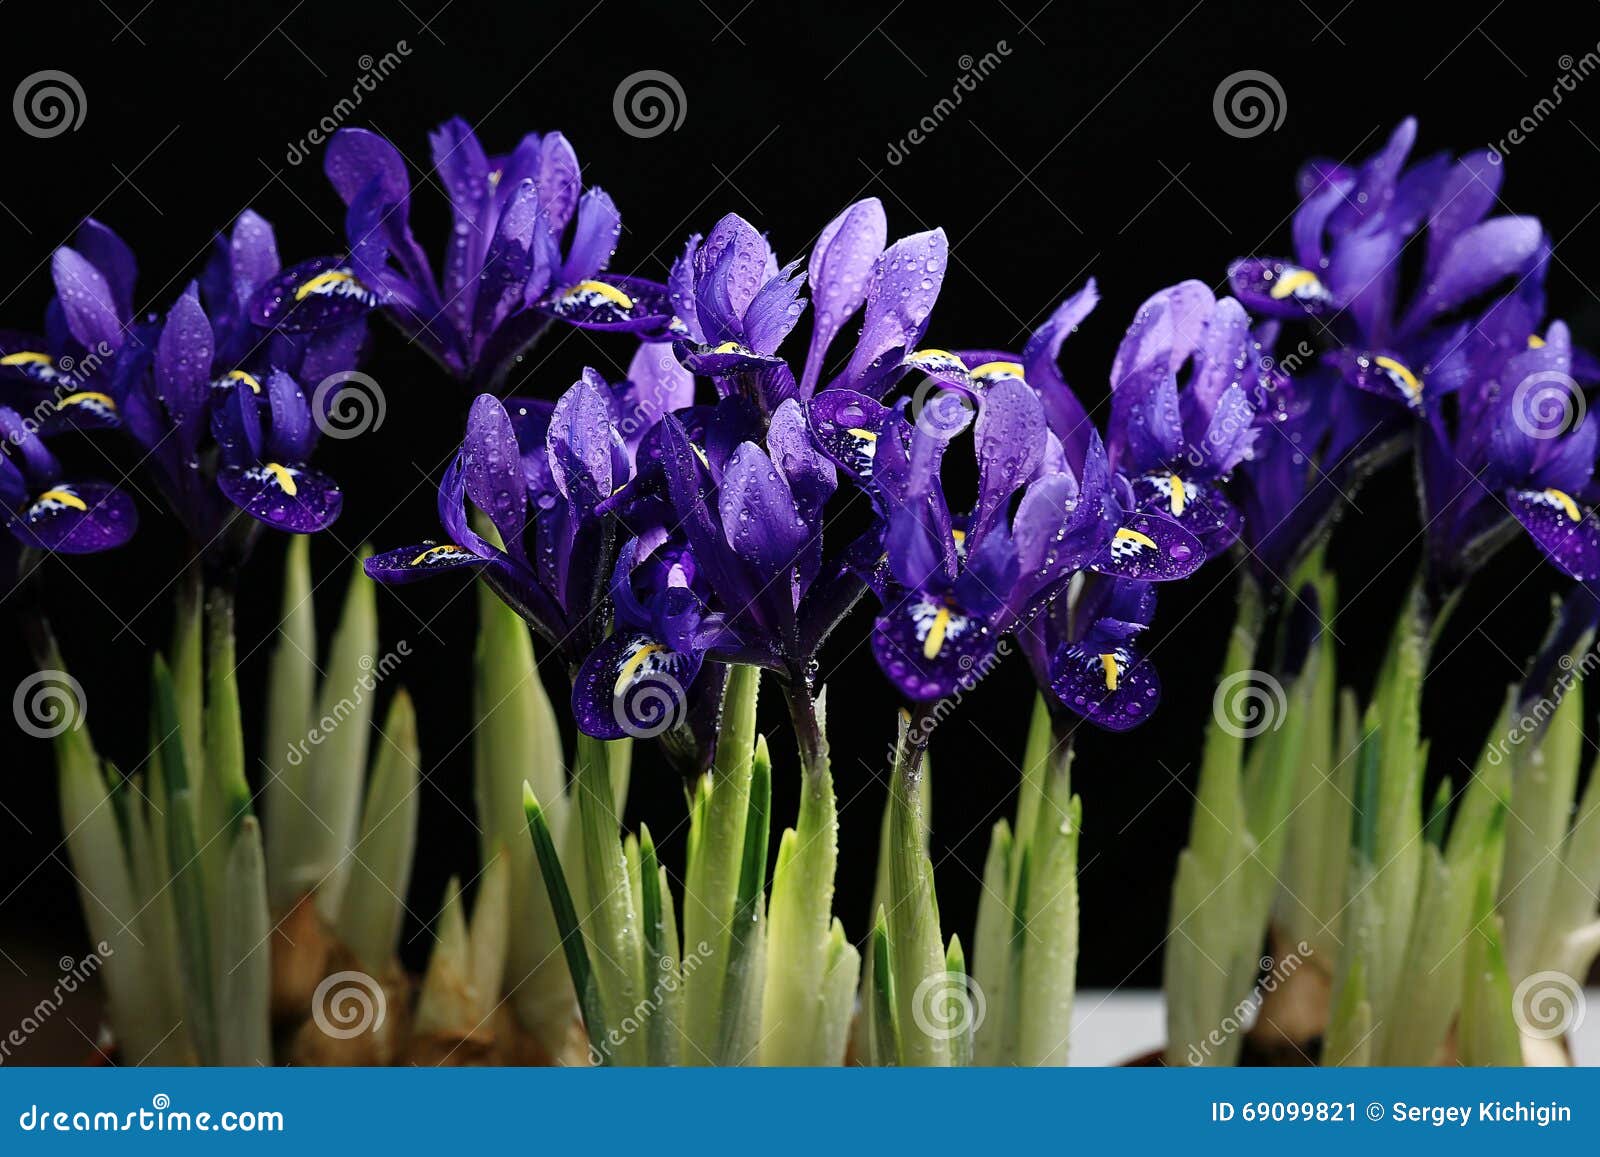 Purple irises stock image. Image of iris, nature, close - 69099821